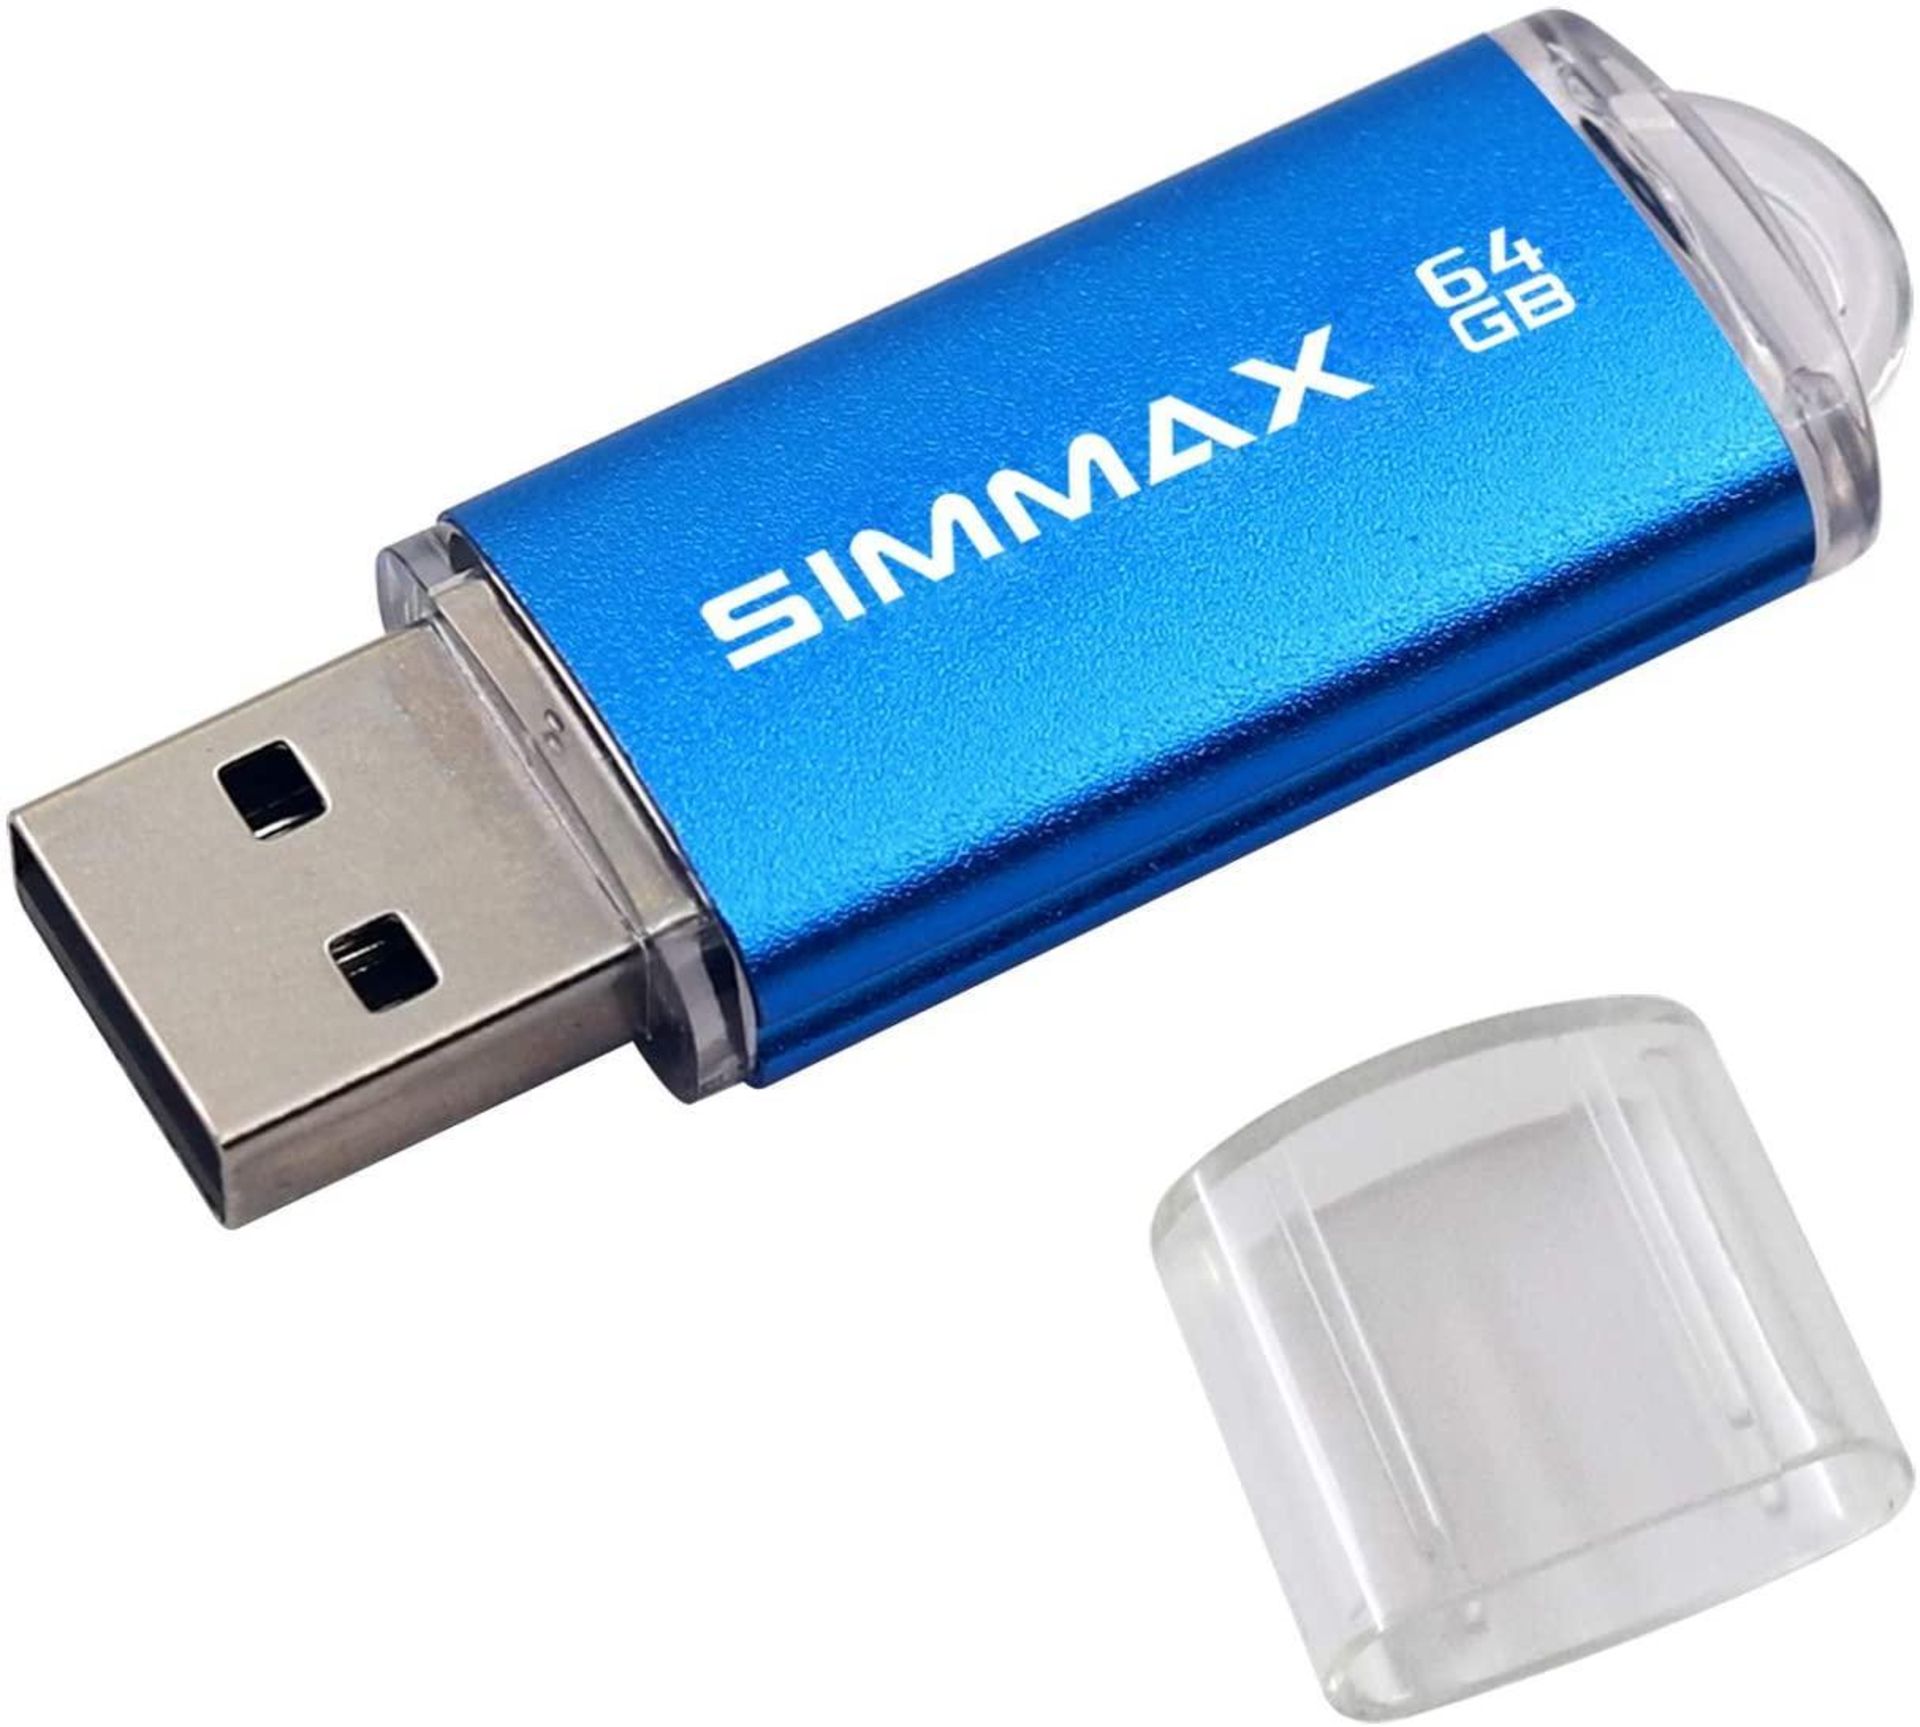 Simmax Memory Stick 64GB USB 2.0 Flash Drives Thumb Drive Pen Drive (64GB Blue)£7.99 RRP